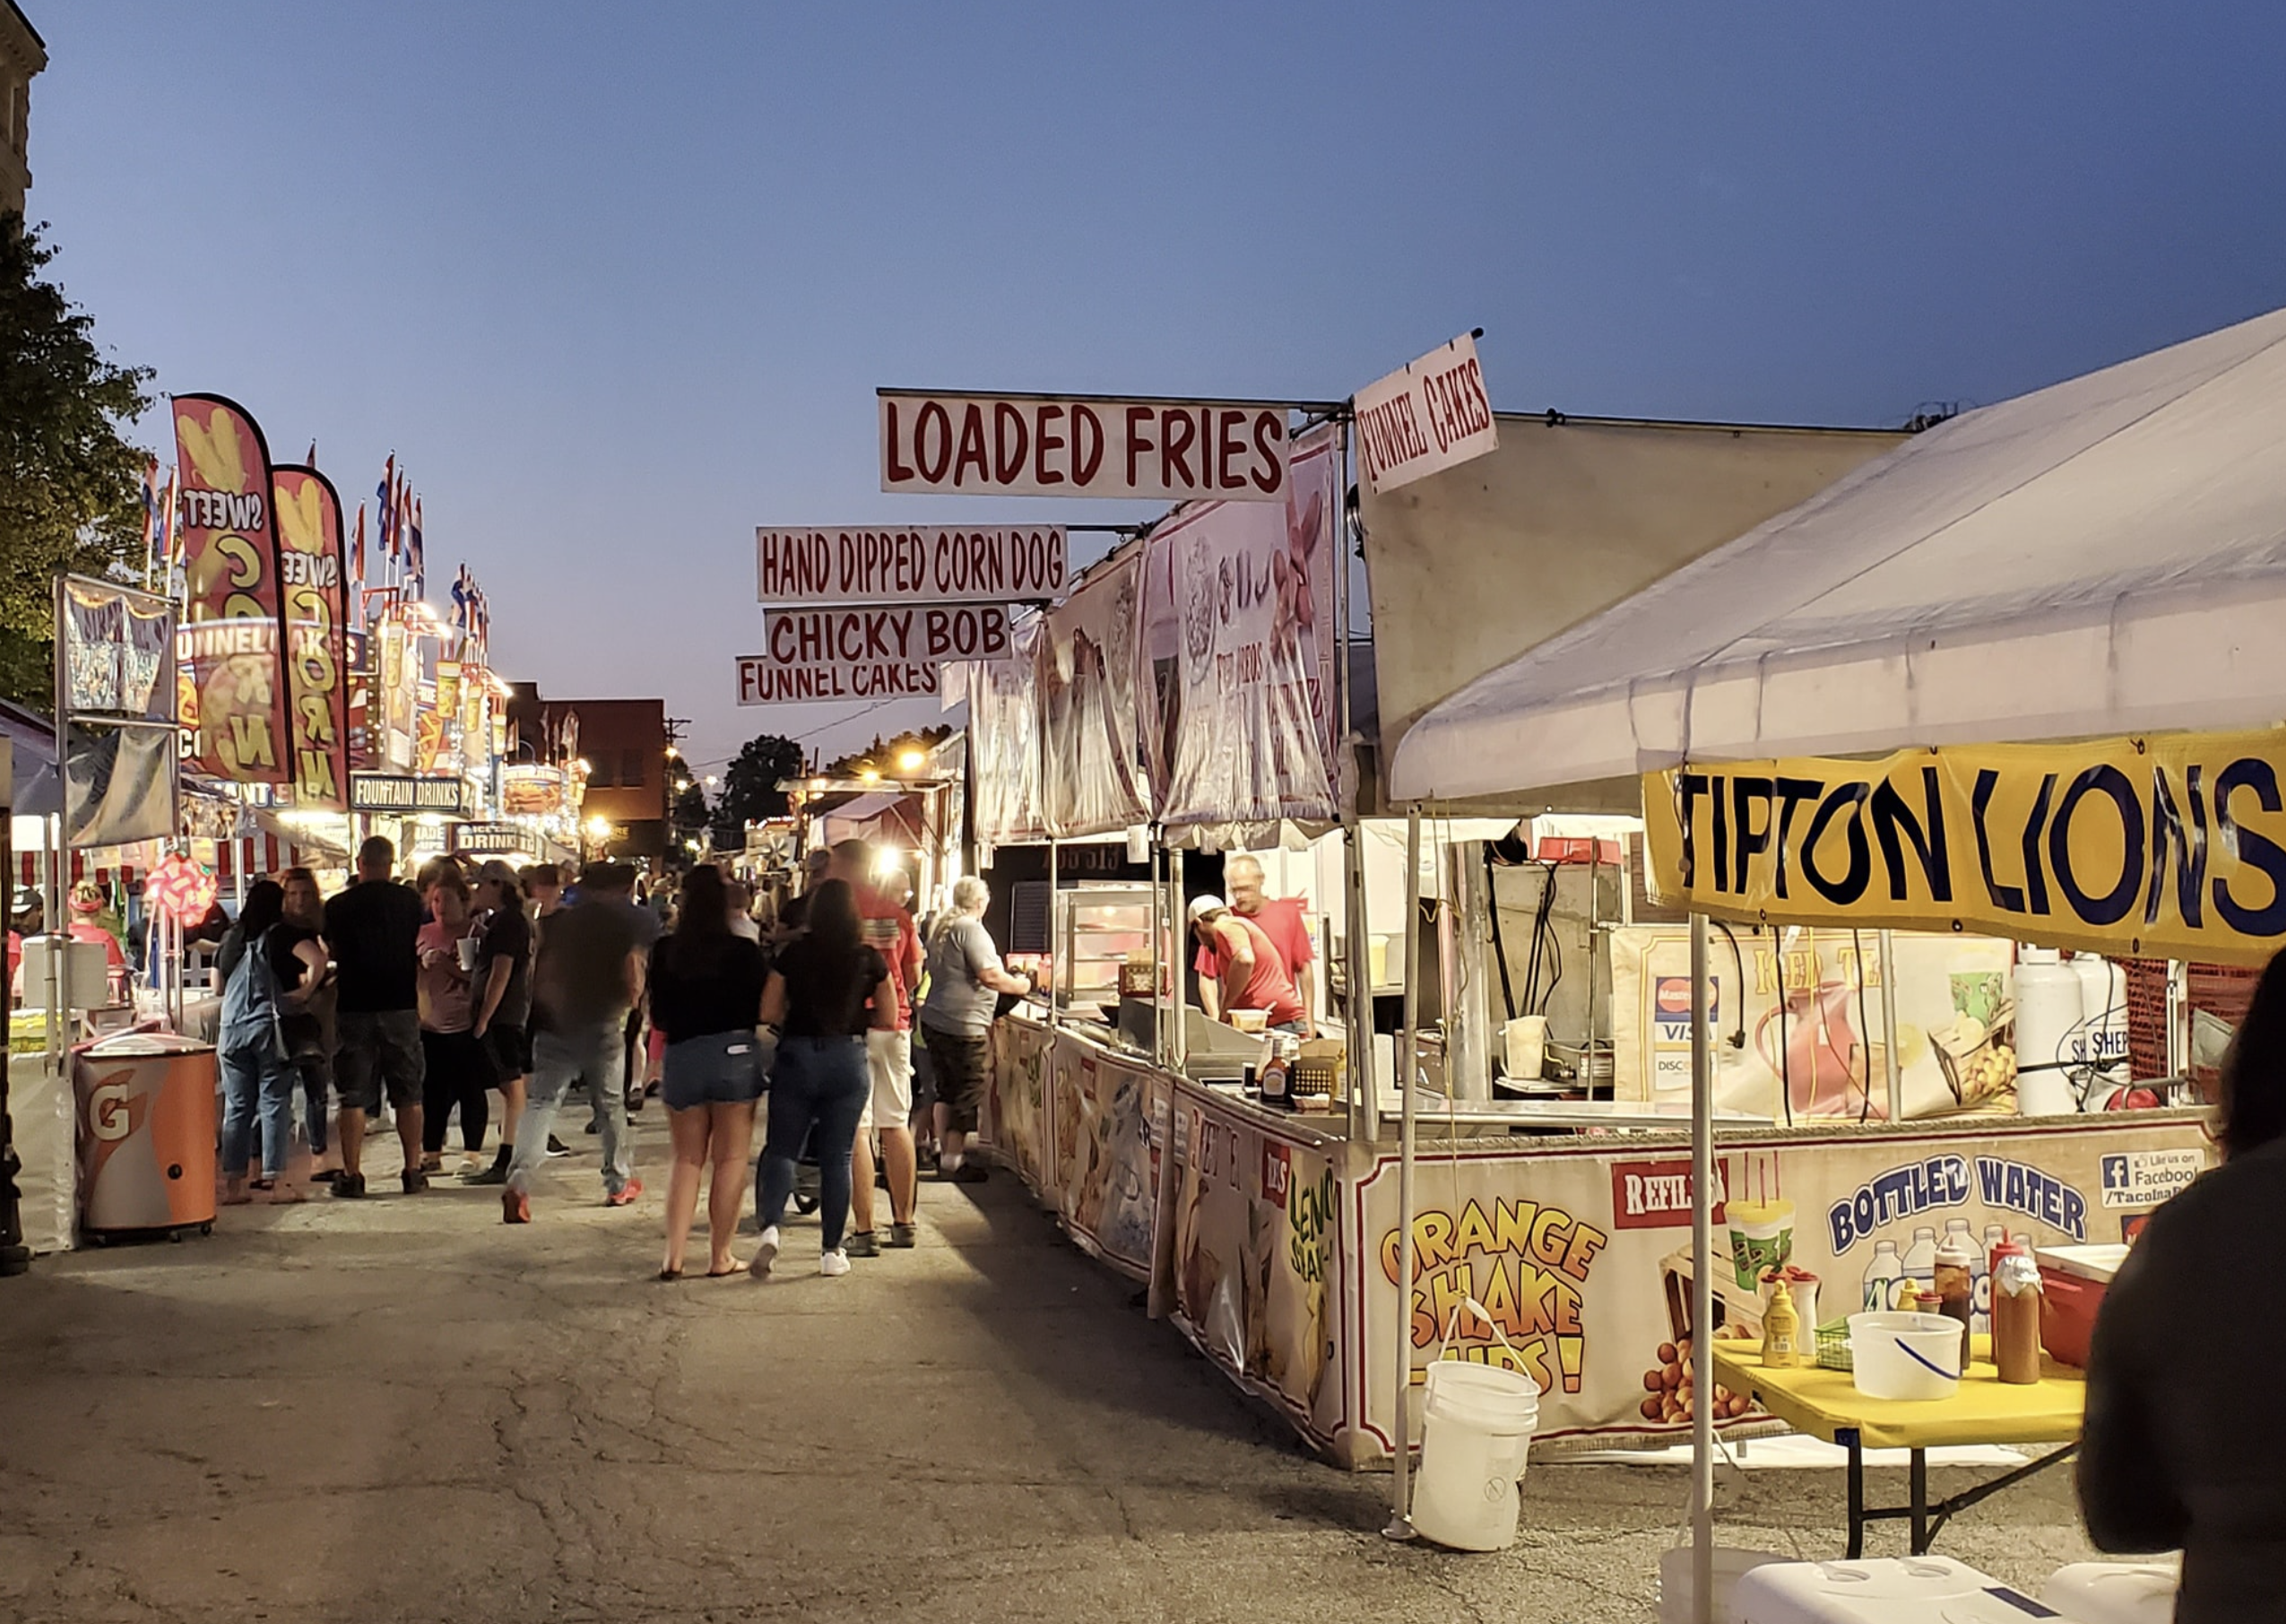 Image of food vendors set up at night